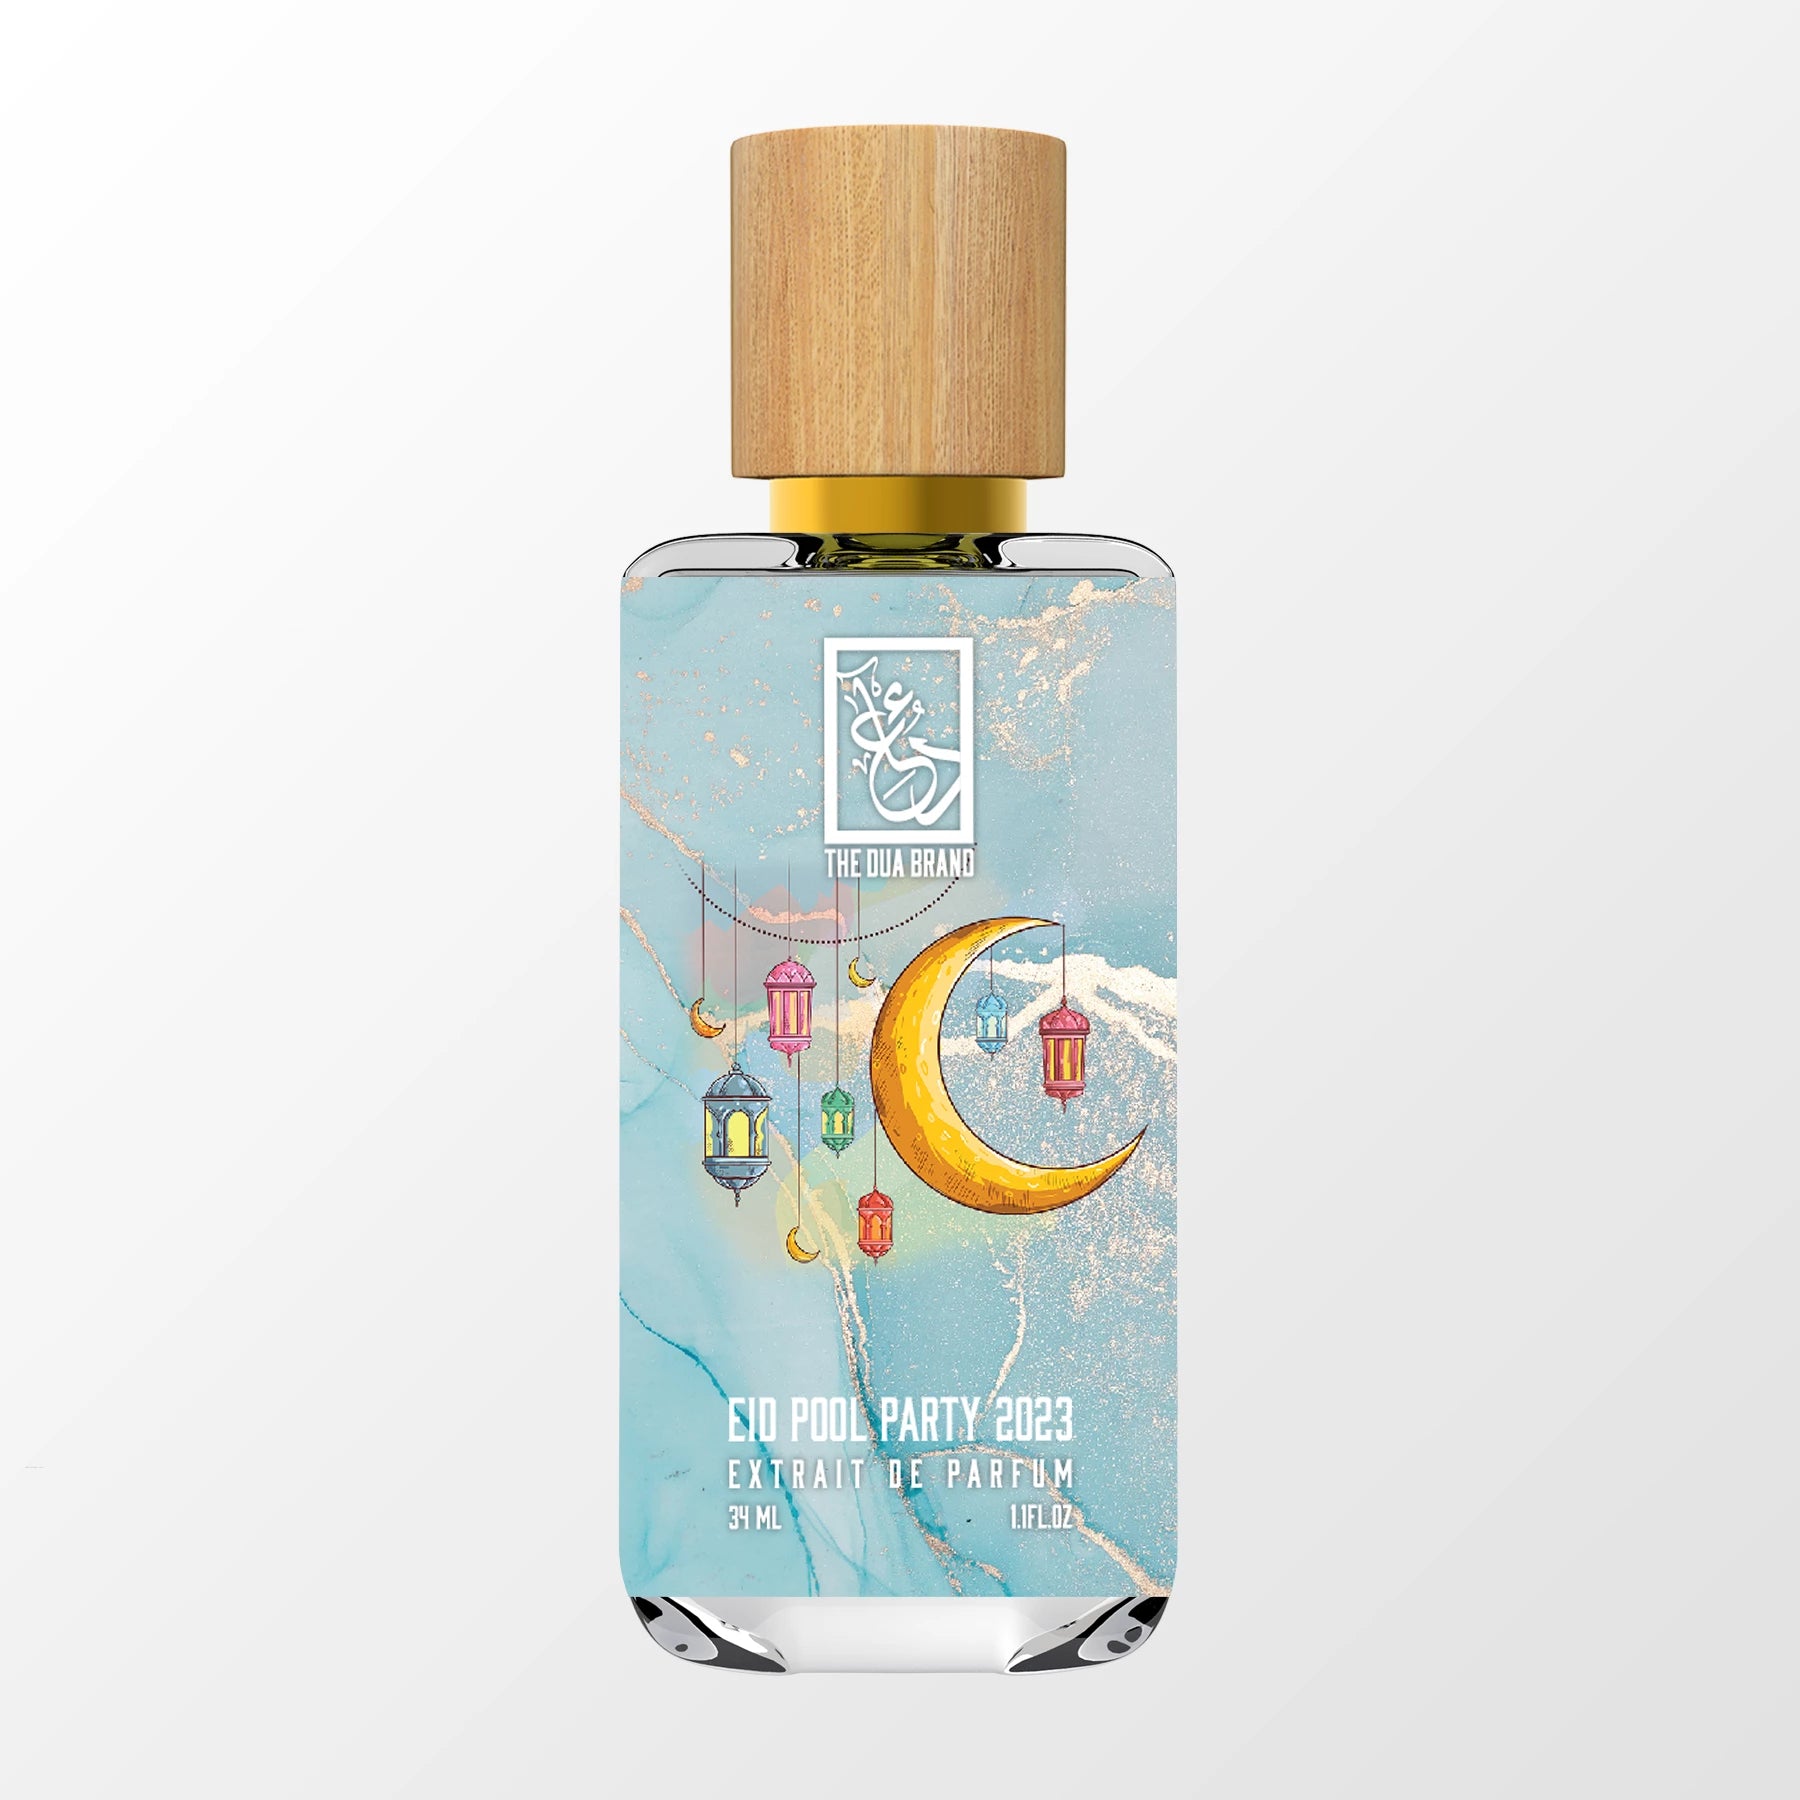 Eid Pool Party 2023 - DUA FRAGRANCES - Citrus Aquatic - Unisex Perfume -  34ml/1.1 FL OZ - Extrait De Parfum